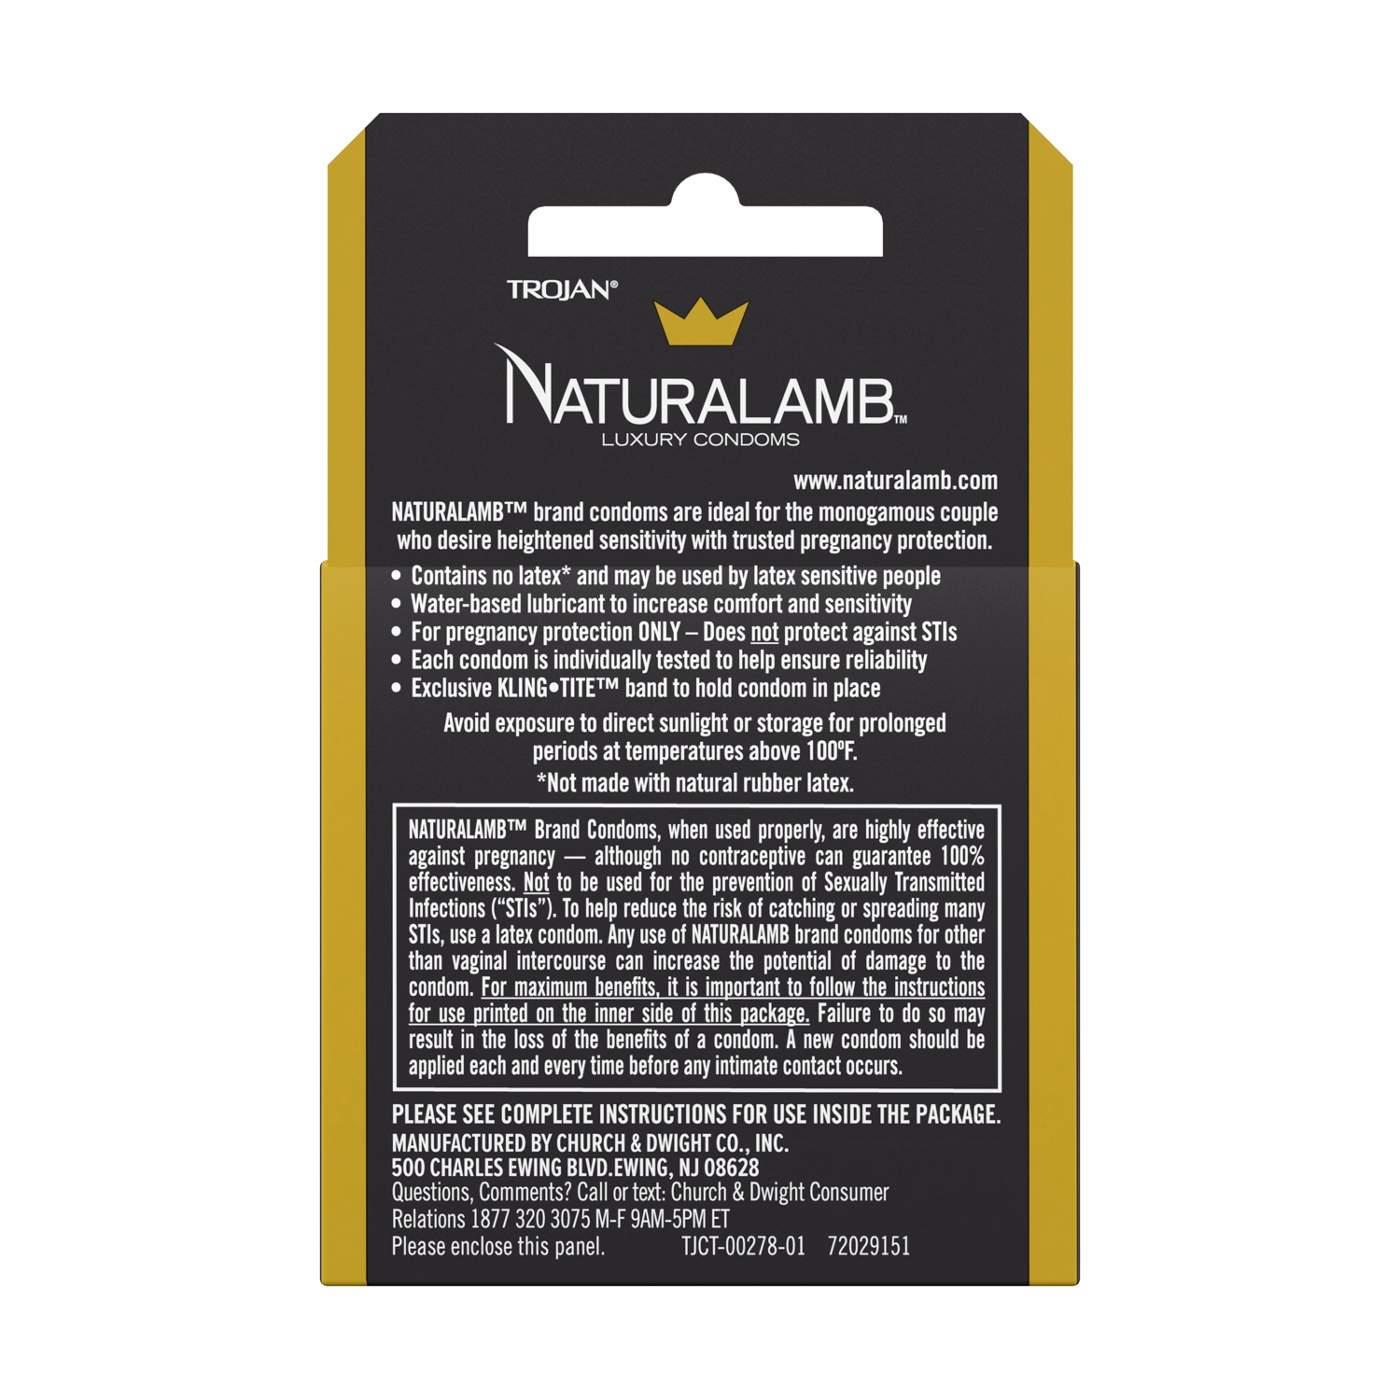 Trojan Naturalamb Luxury Condoms; image 2 of 3